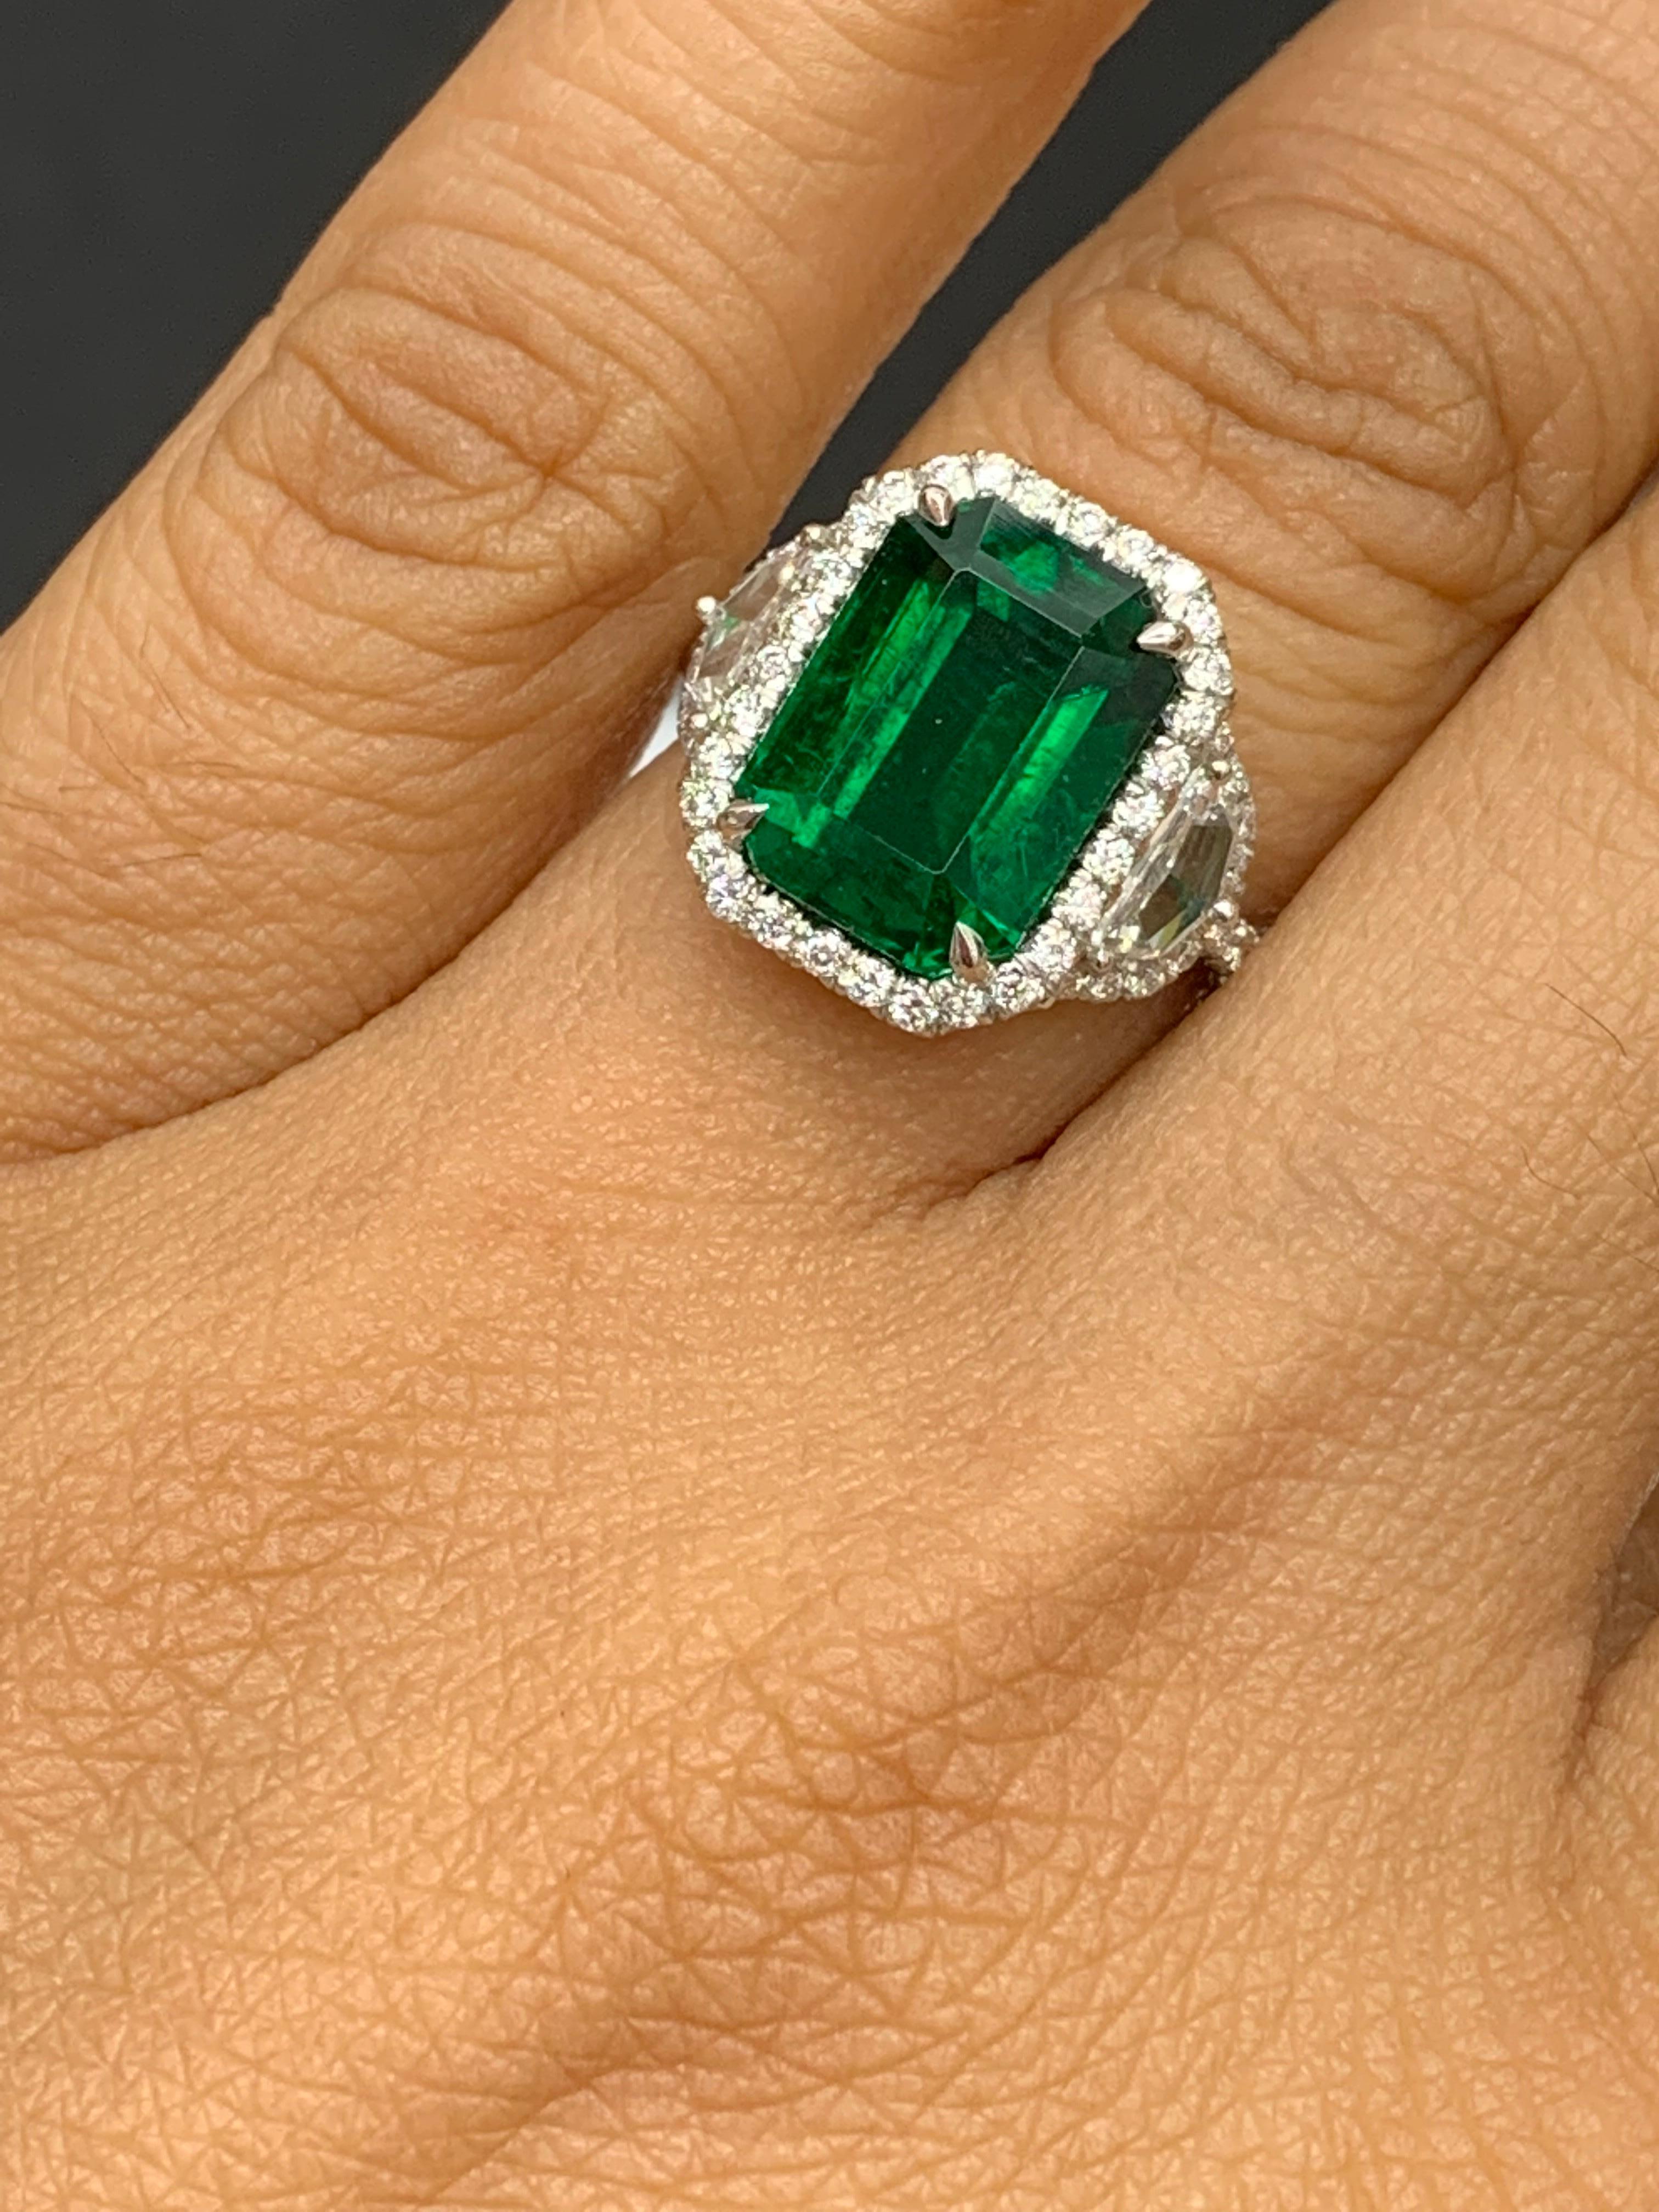 GIA Certified 4.07 Carat Emerald Cut Emerald Diamond 3 Stone Ring in Platinum For Sale 4